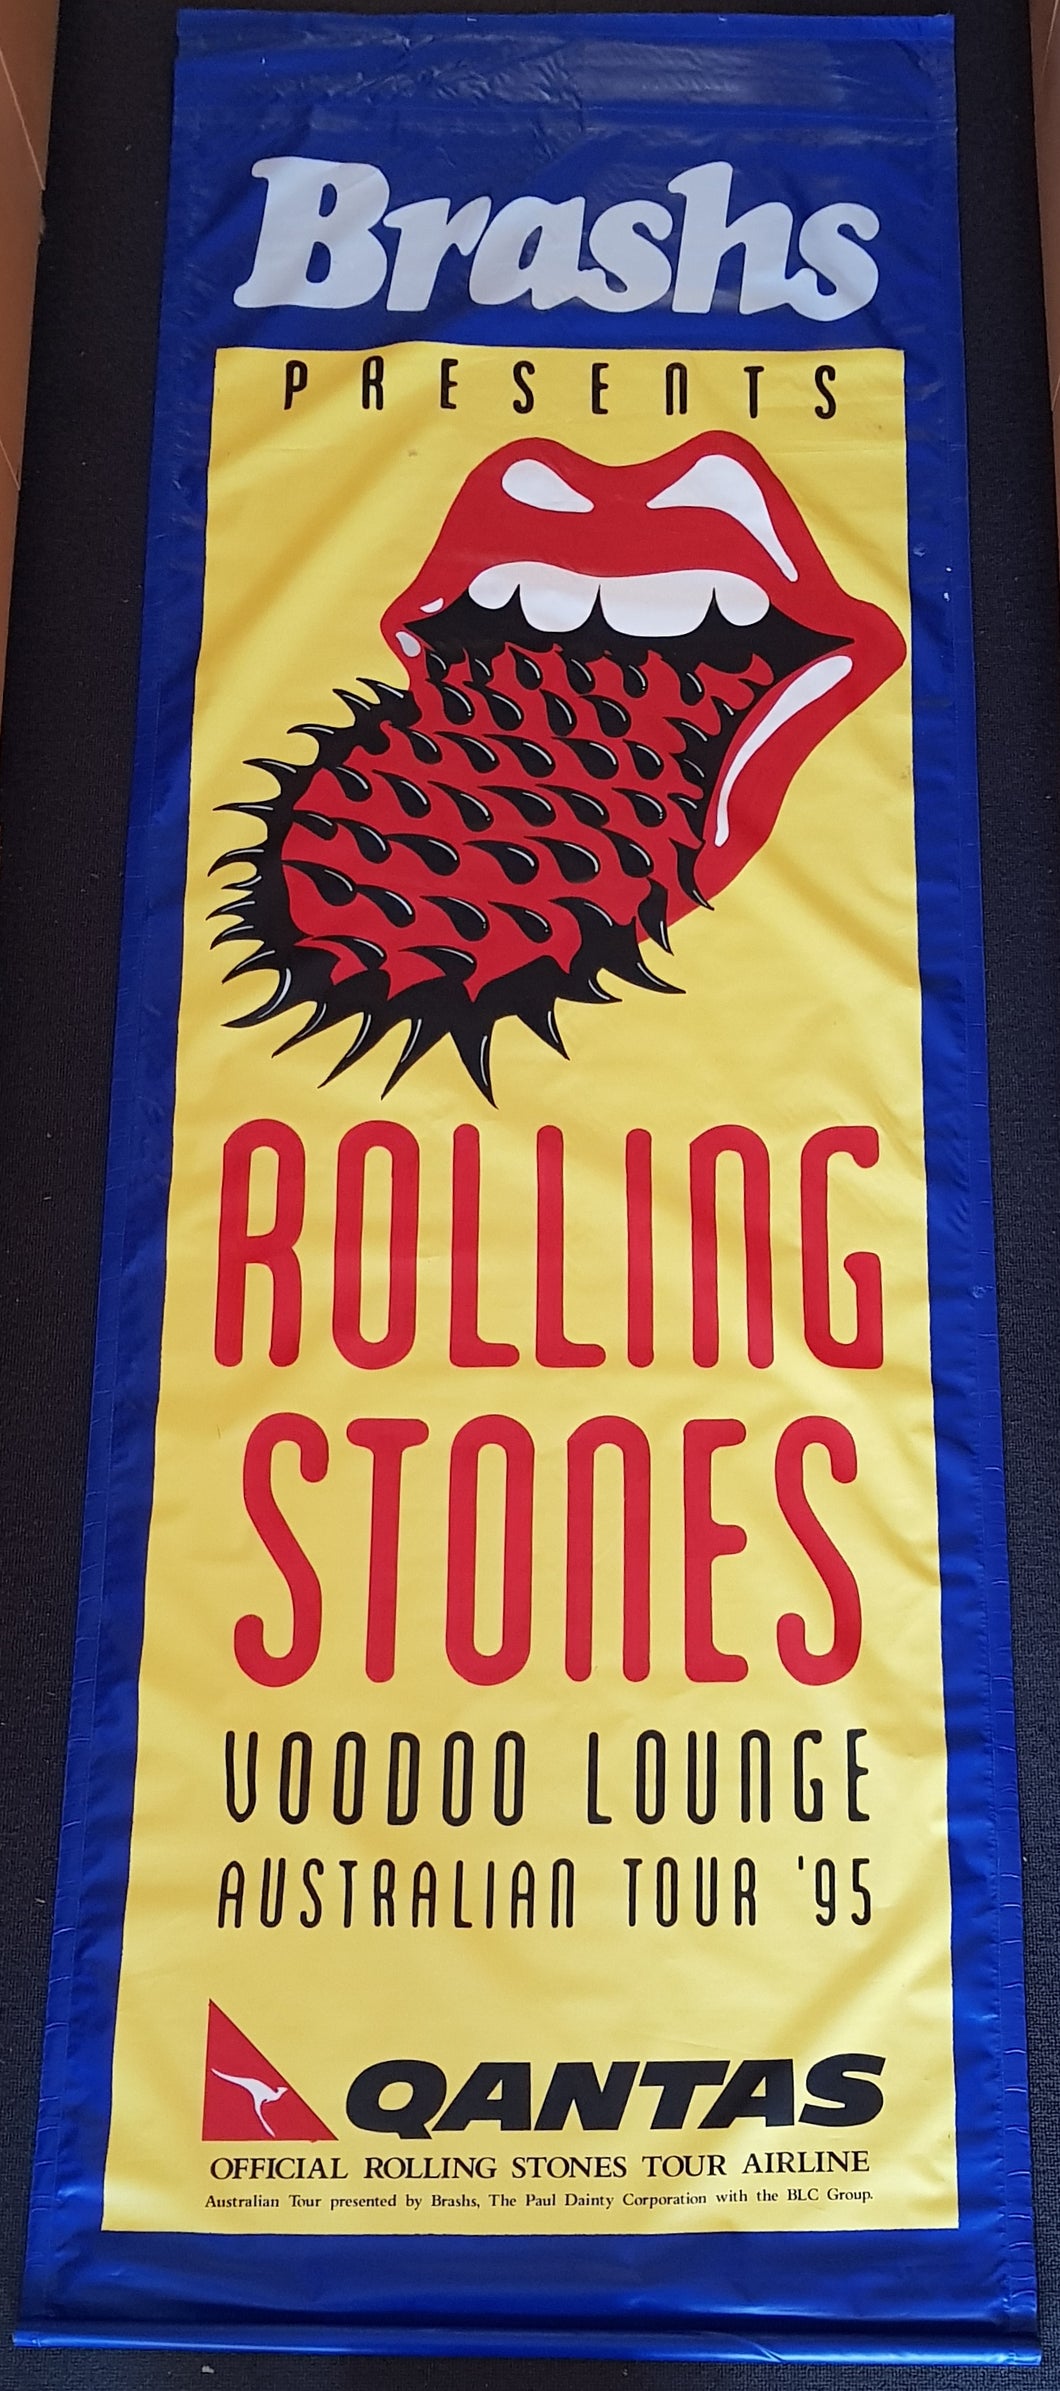 Rolling Stones - Brashs Presents Voodoo Lounge Tour